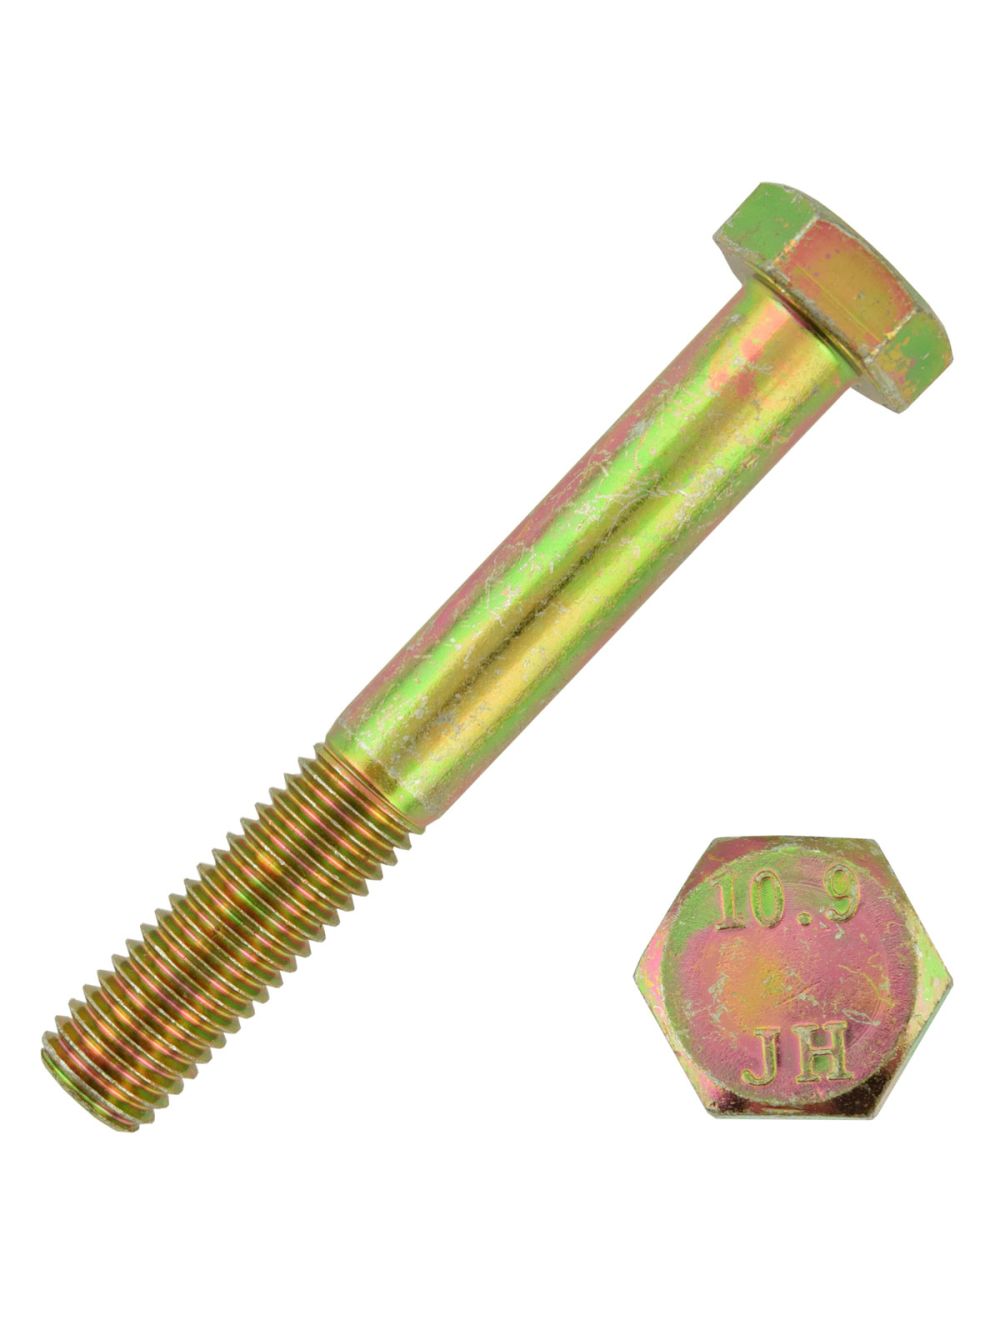 M14-2.0 x 30MM Hex Bolt Zinc Plated Grade 10.9 Cap Screw Metric Qty 300 